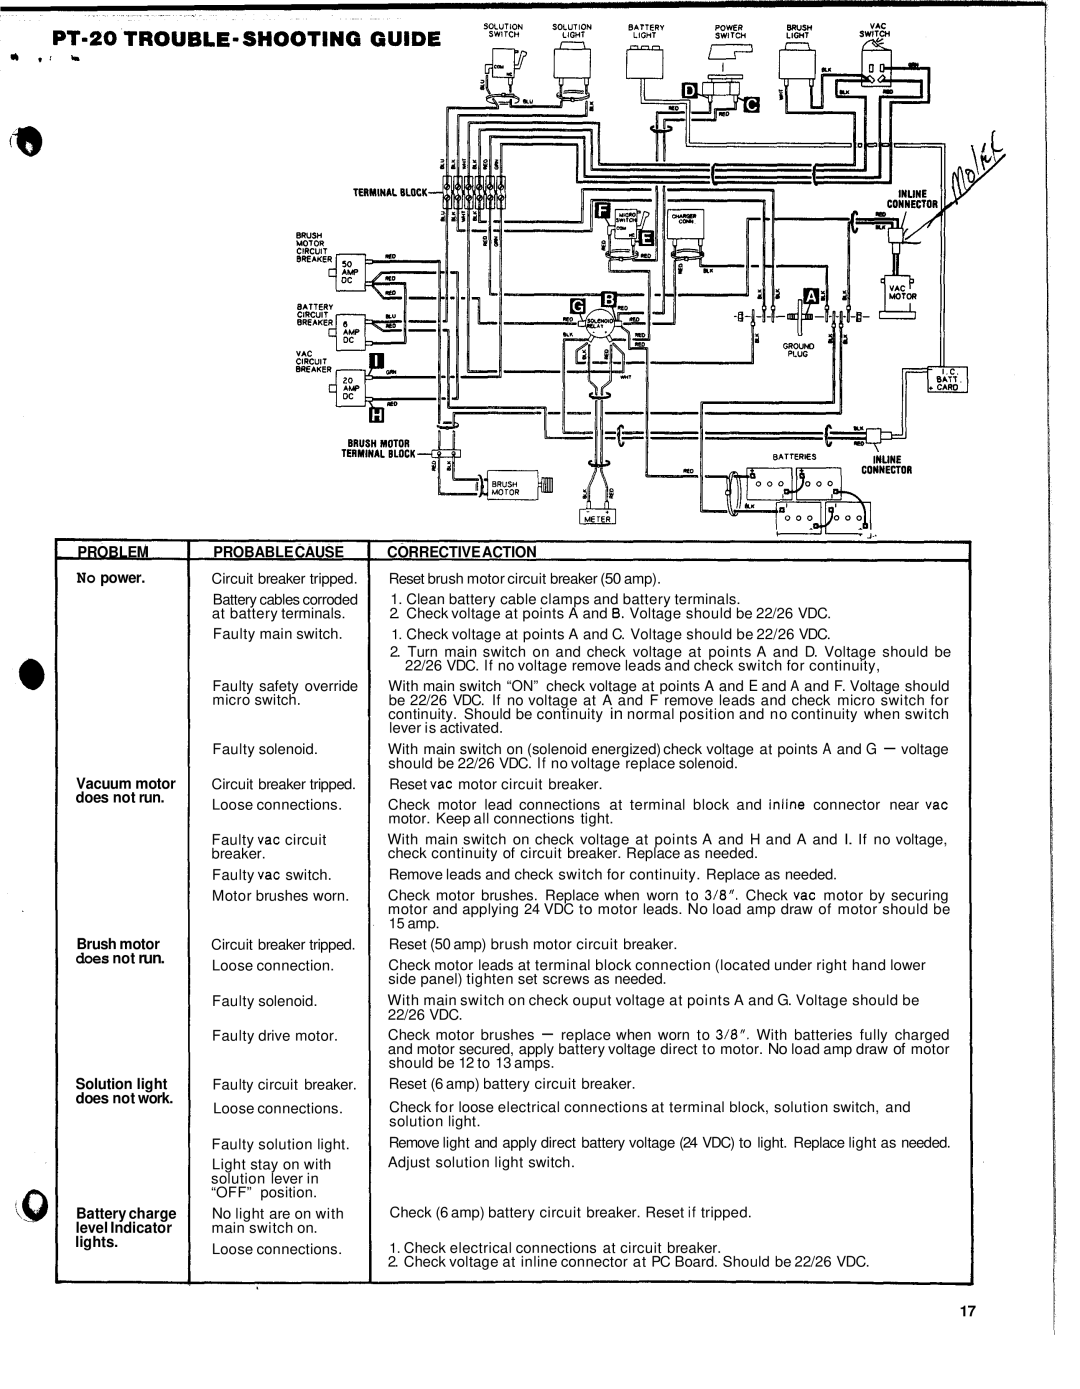 Windsor PT-20 manual PROBLEM No power, Probablecause, Correctiveaction 